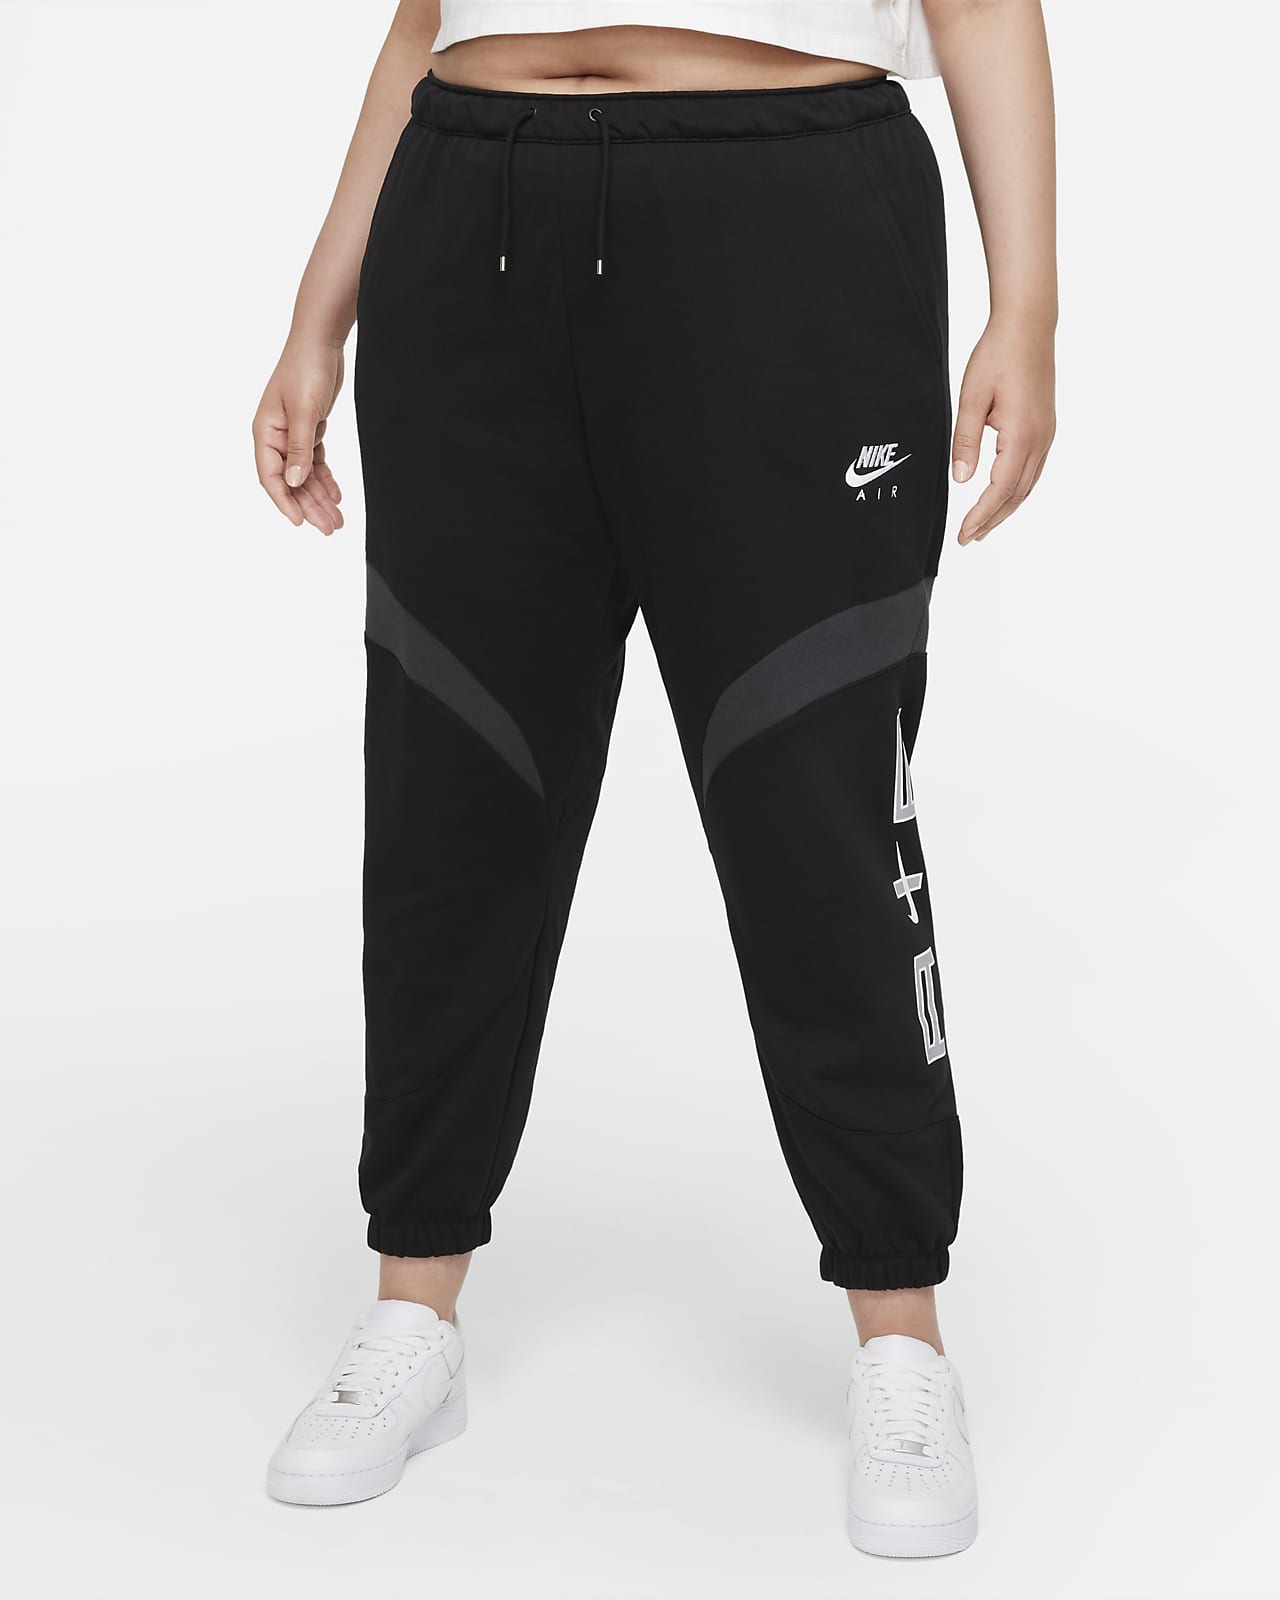 Nike Air Women's Joggers (Plus Size)